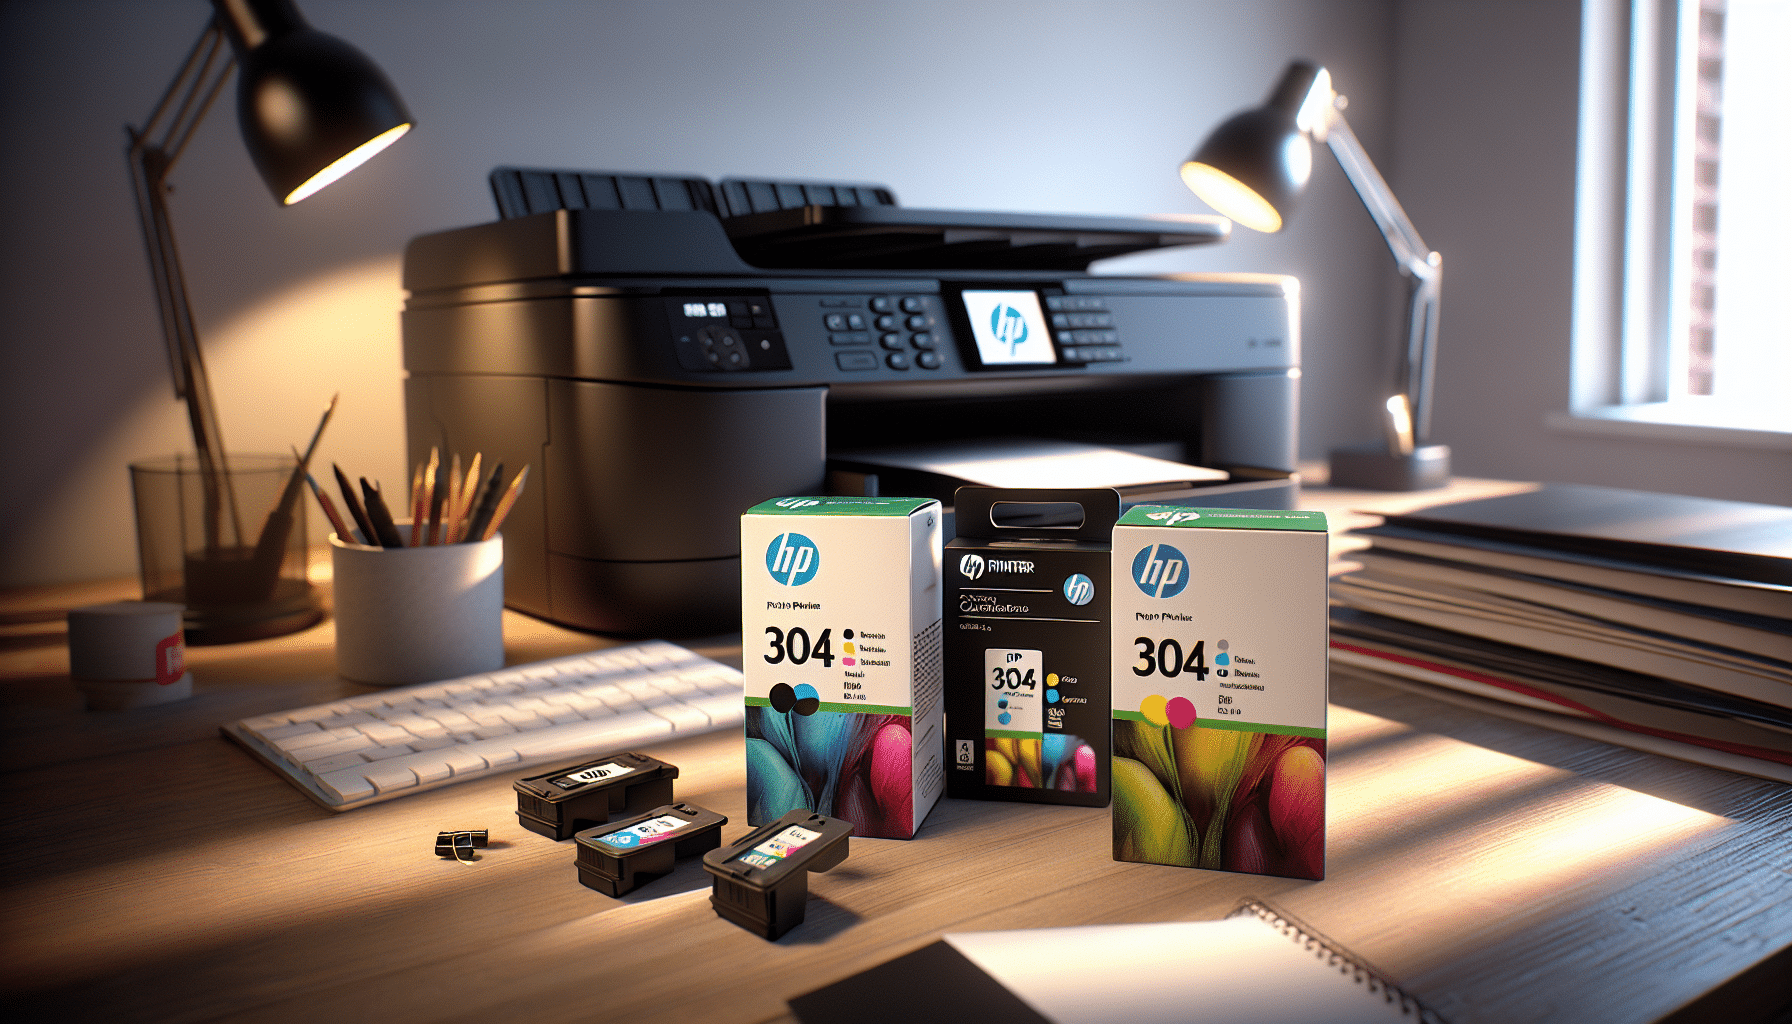 HP printer and 304 ink cartridges setup workspace